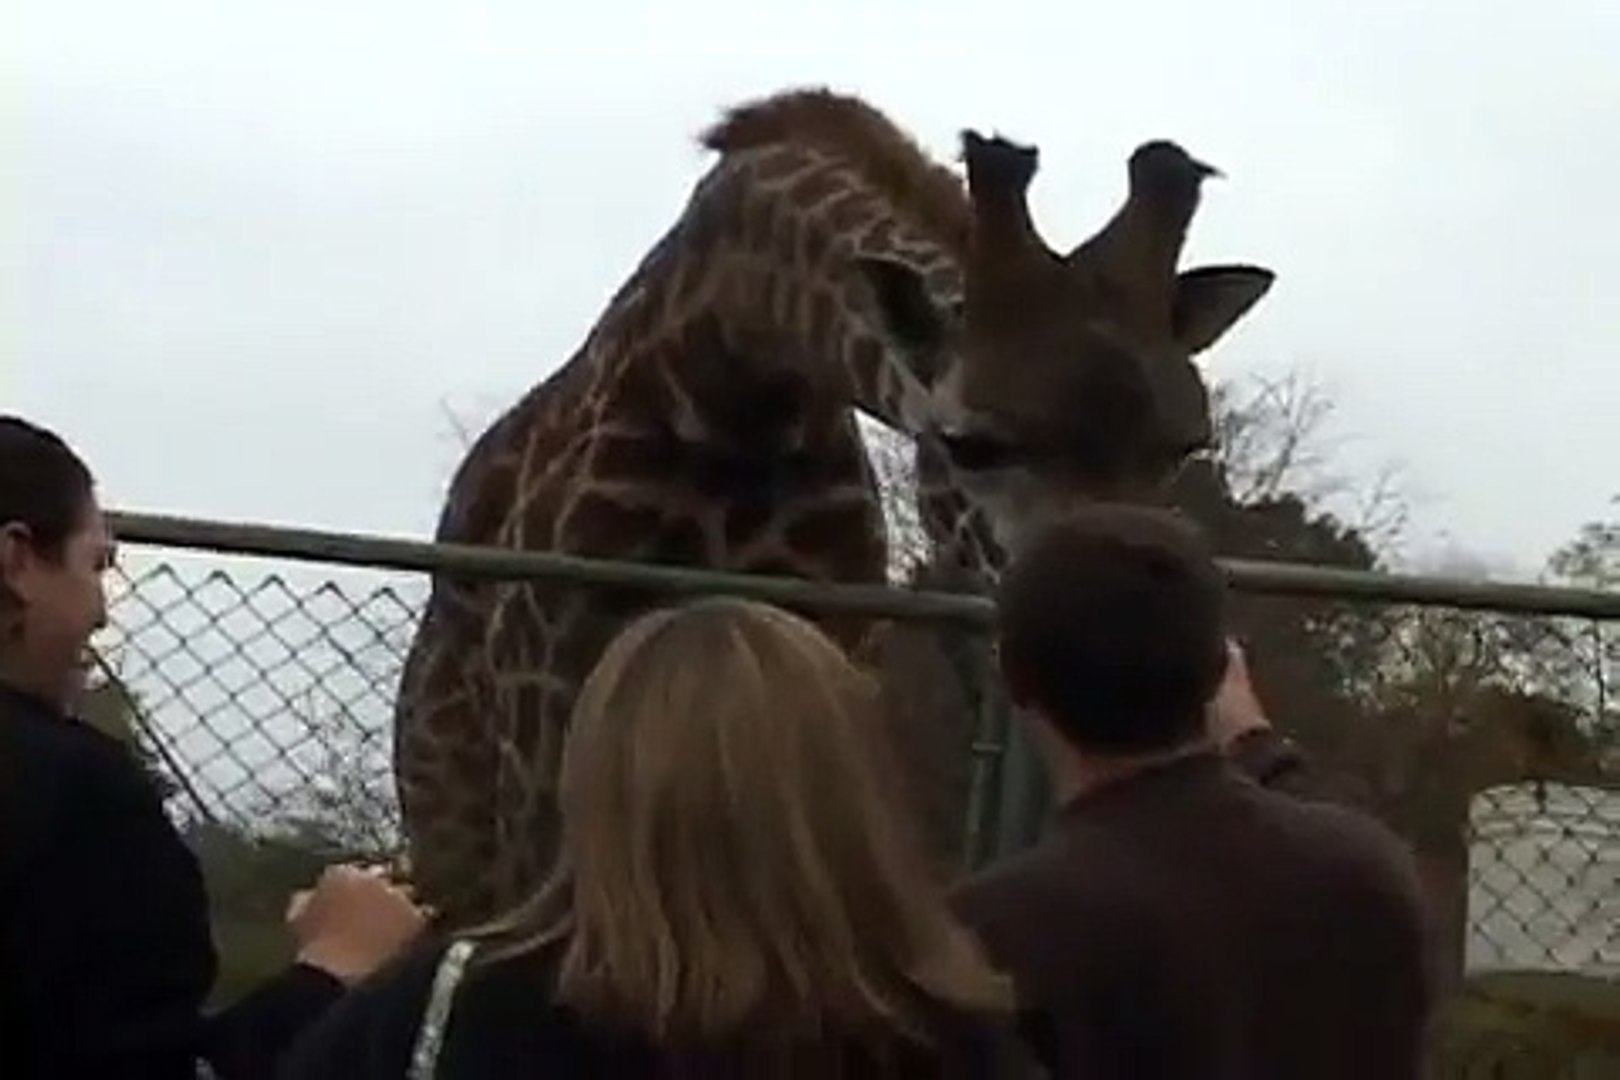 Giraffe Kiss